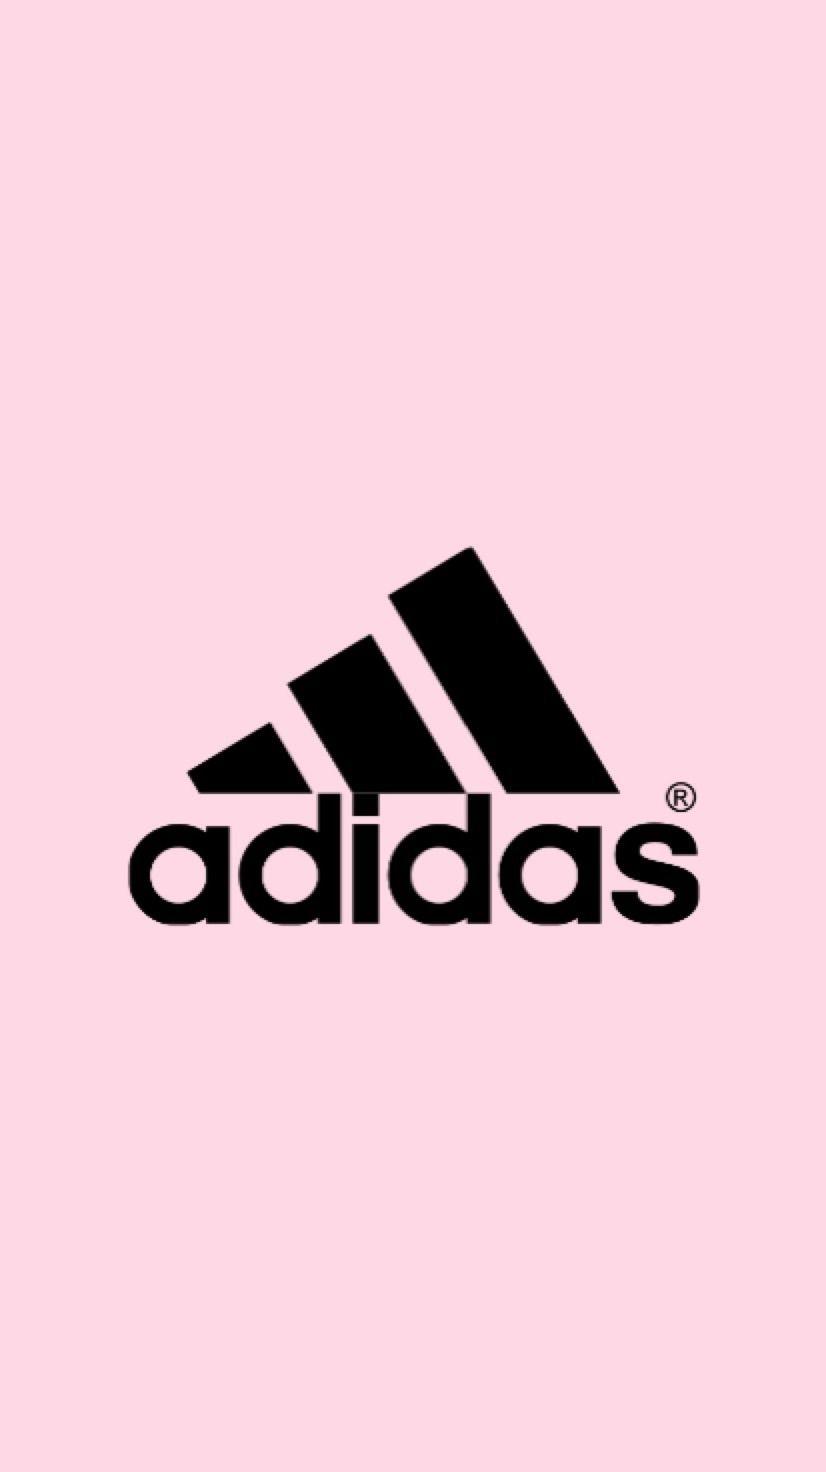 adidas wallpaper pink